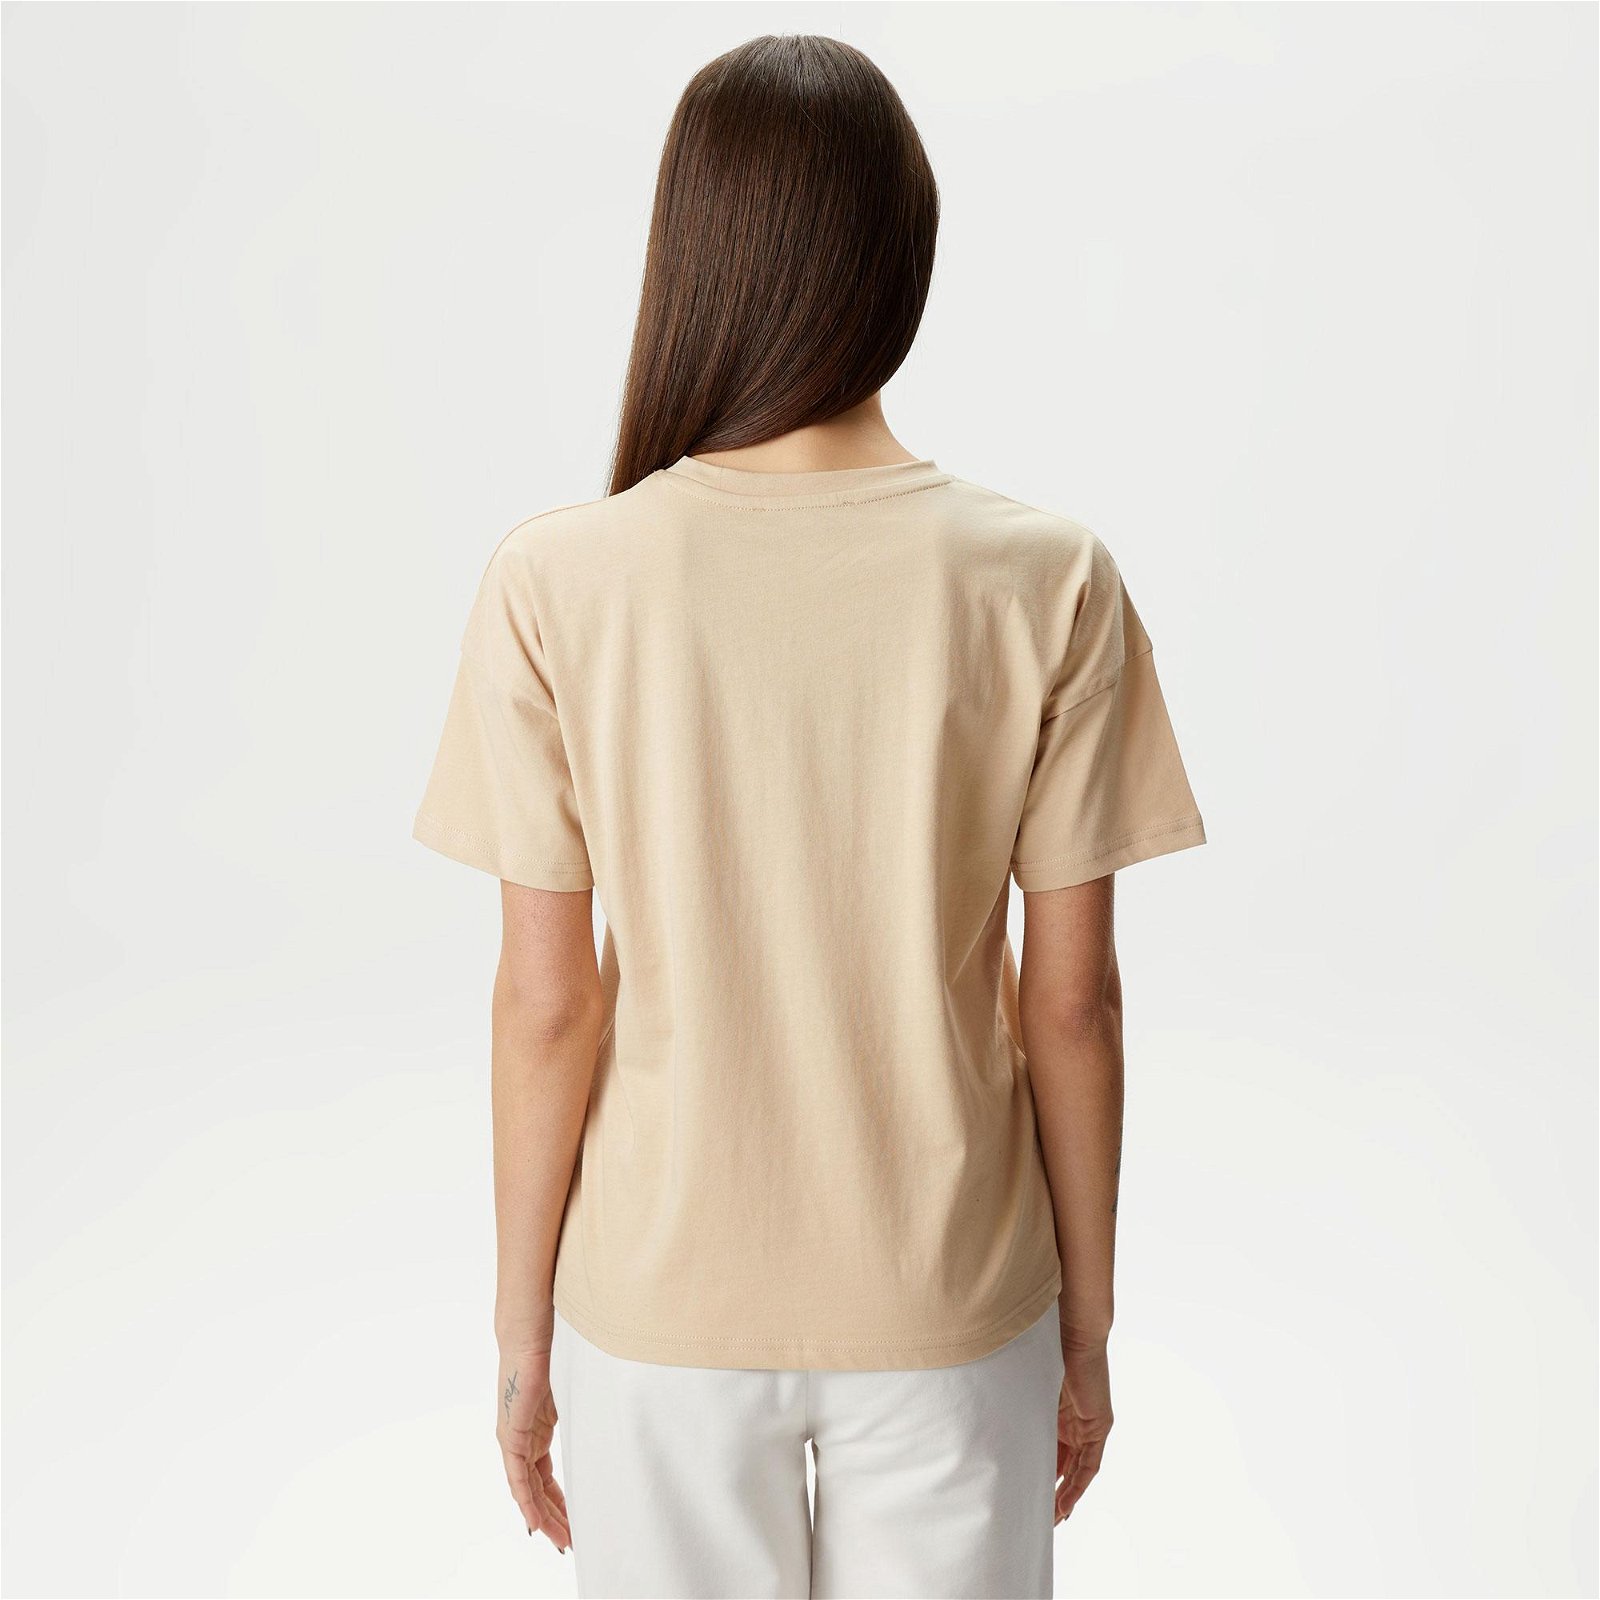 Ucla Avalon Kadın Krem Rengi T-Shirt